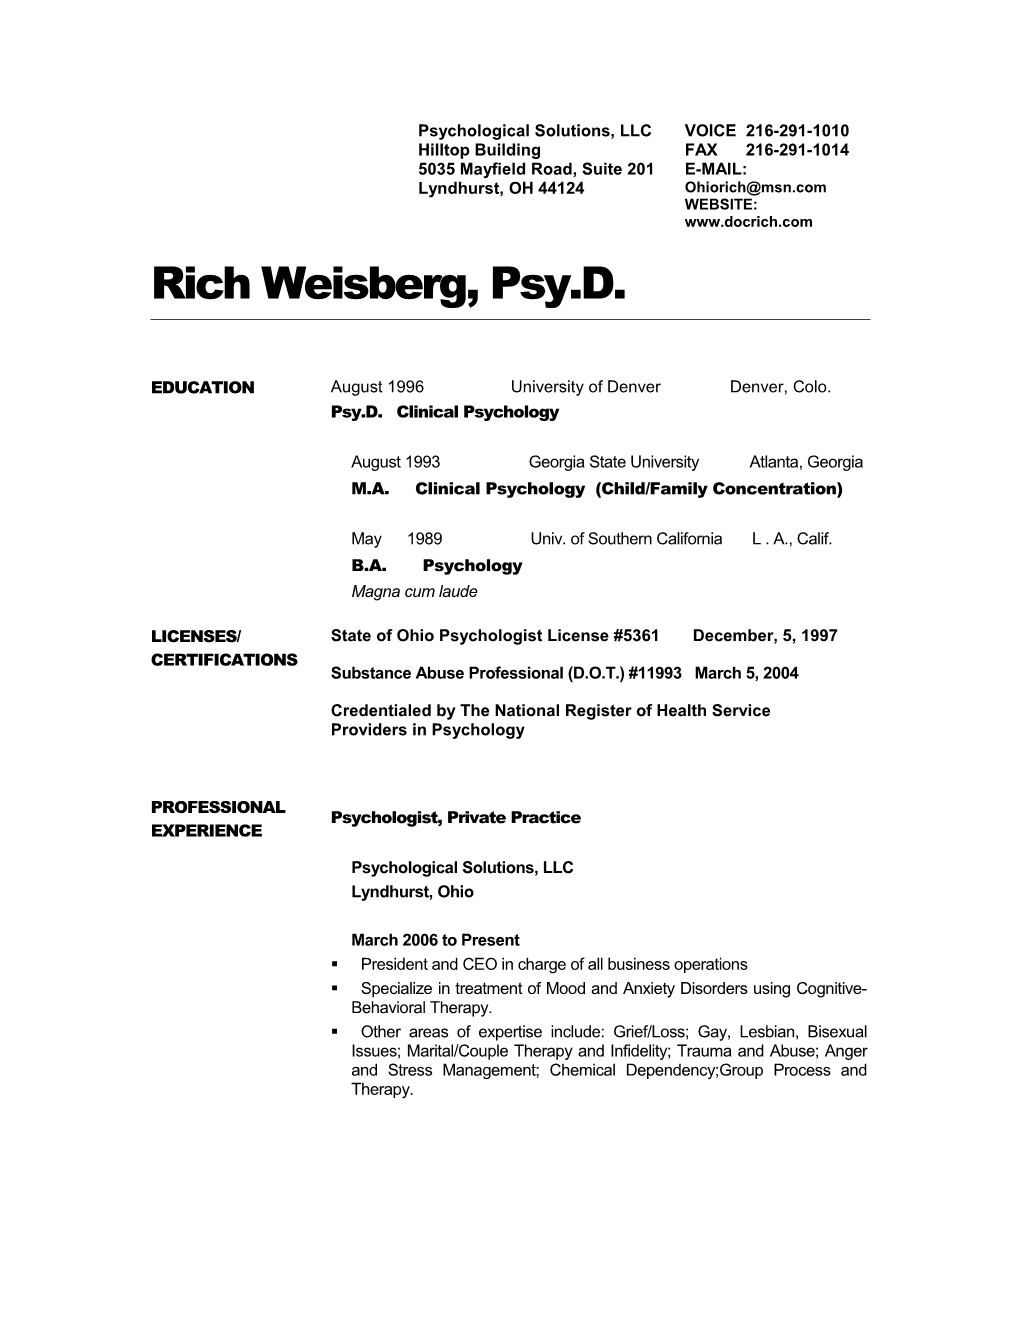 Rich Weisberg, Psy.D